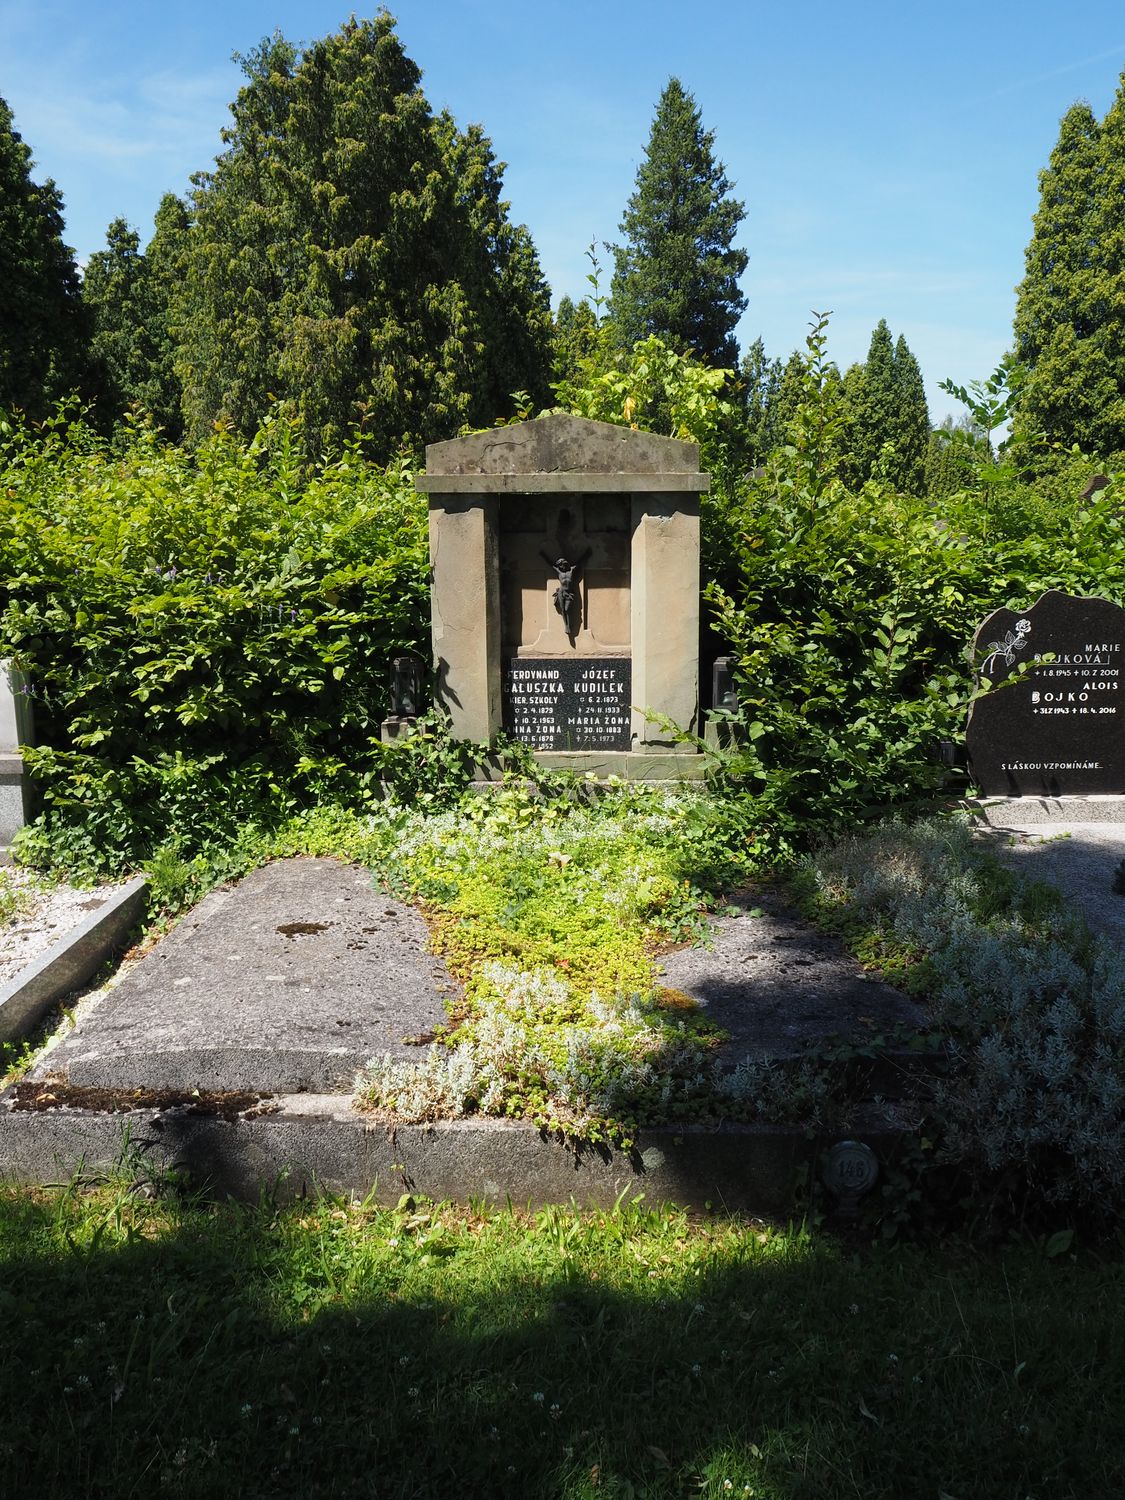 Tombstone of Anna and Ferdinand Galuszka and Josef and Maria Kudilek, cemetery in Český Těšín, as of 2022.